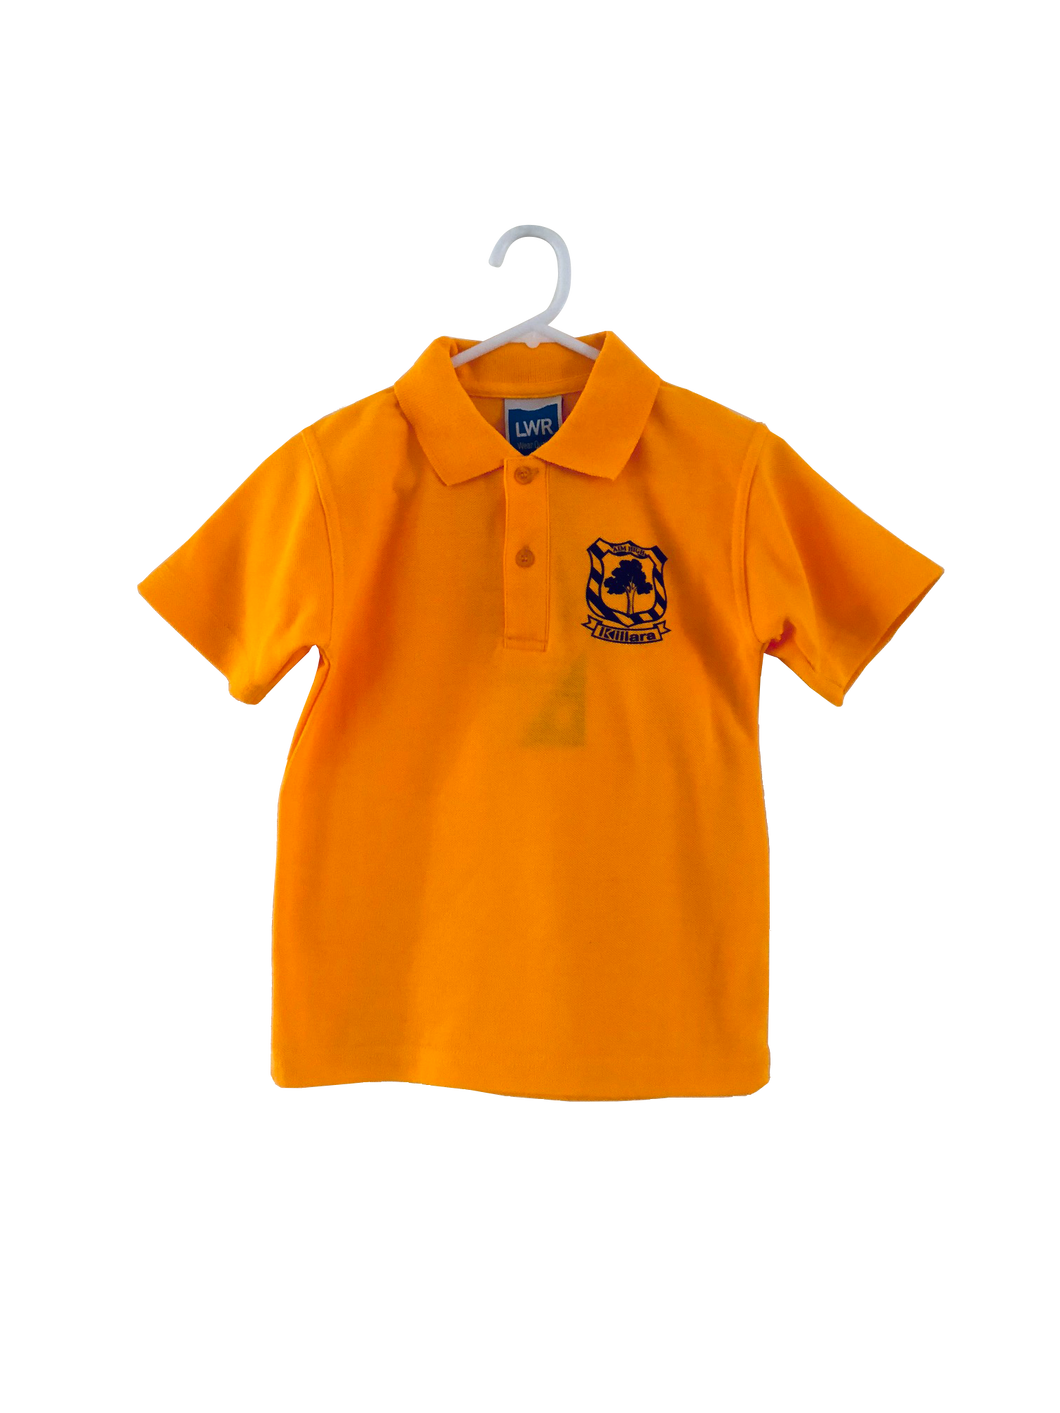 Yellow Sports Shirt - Short Sleeve (Unisex)